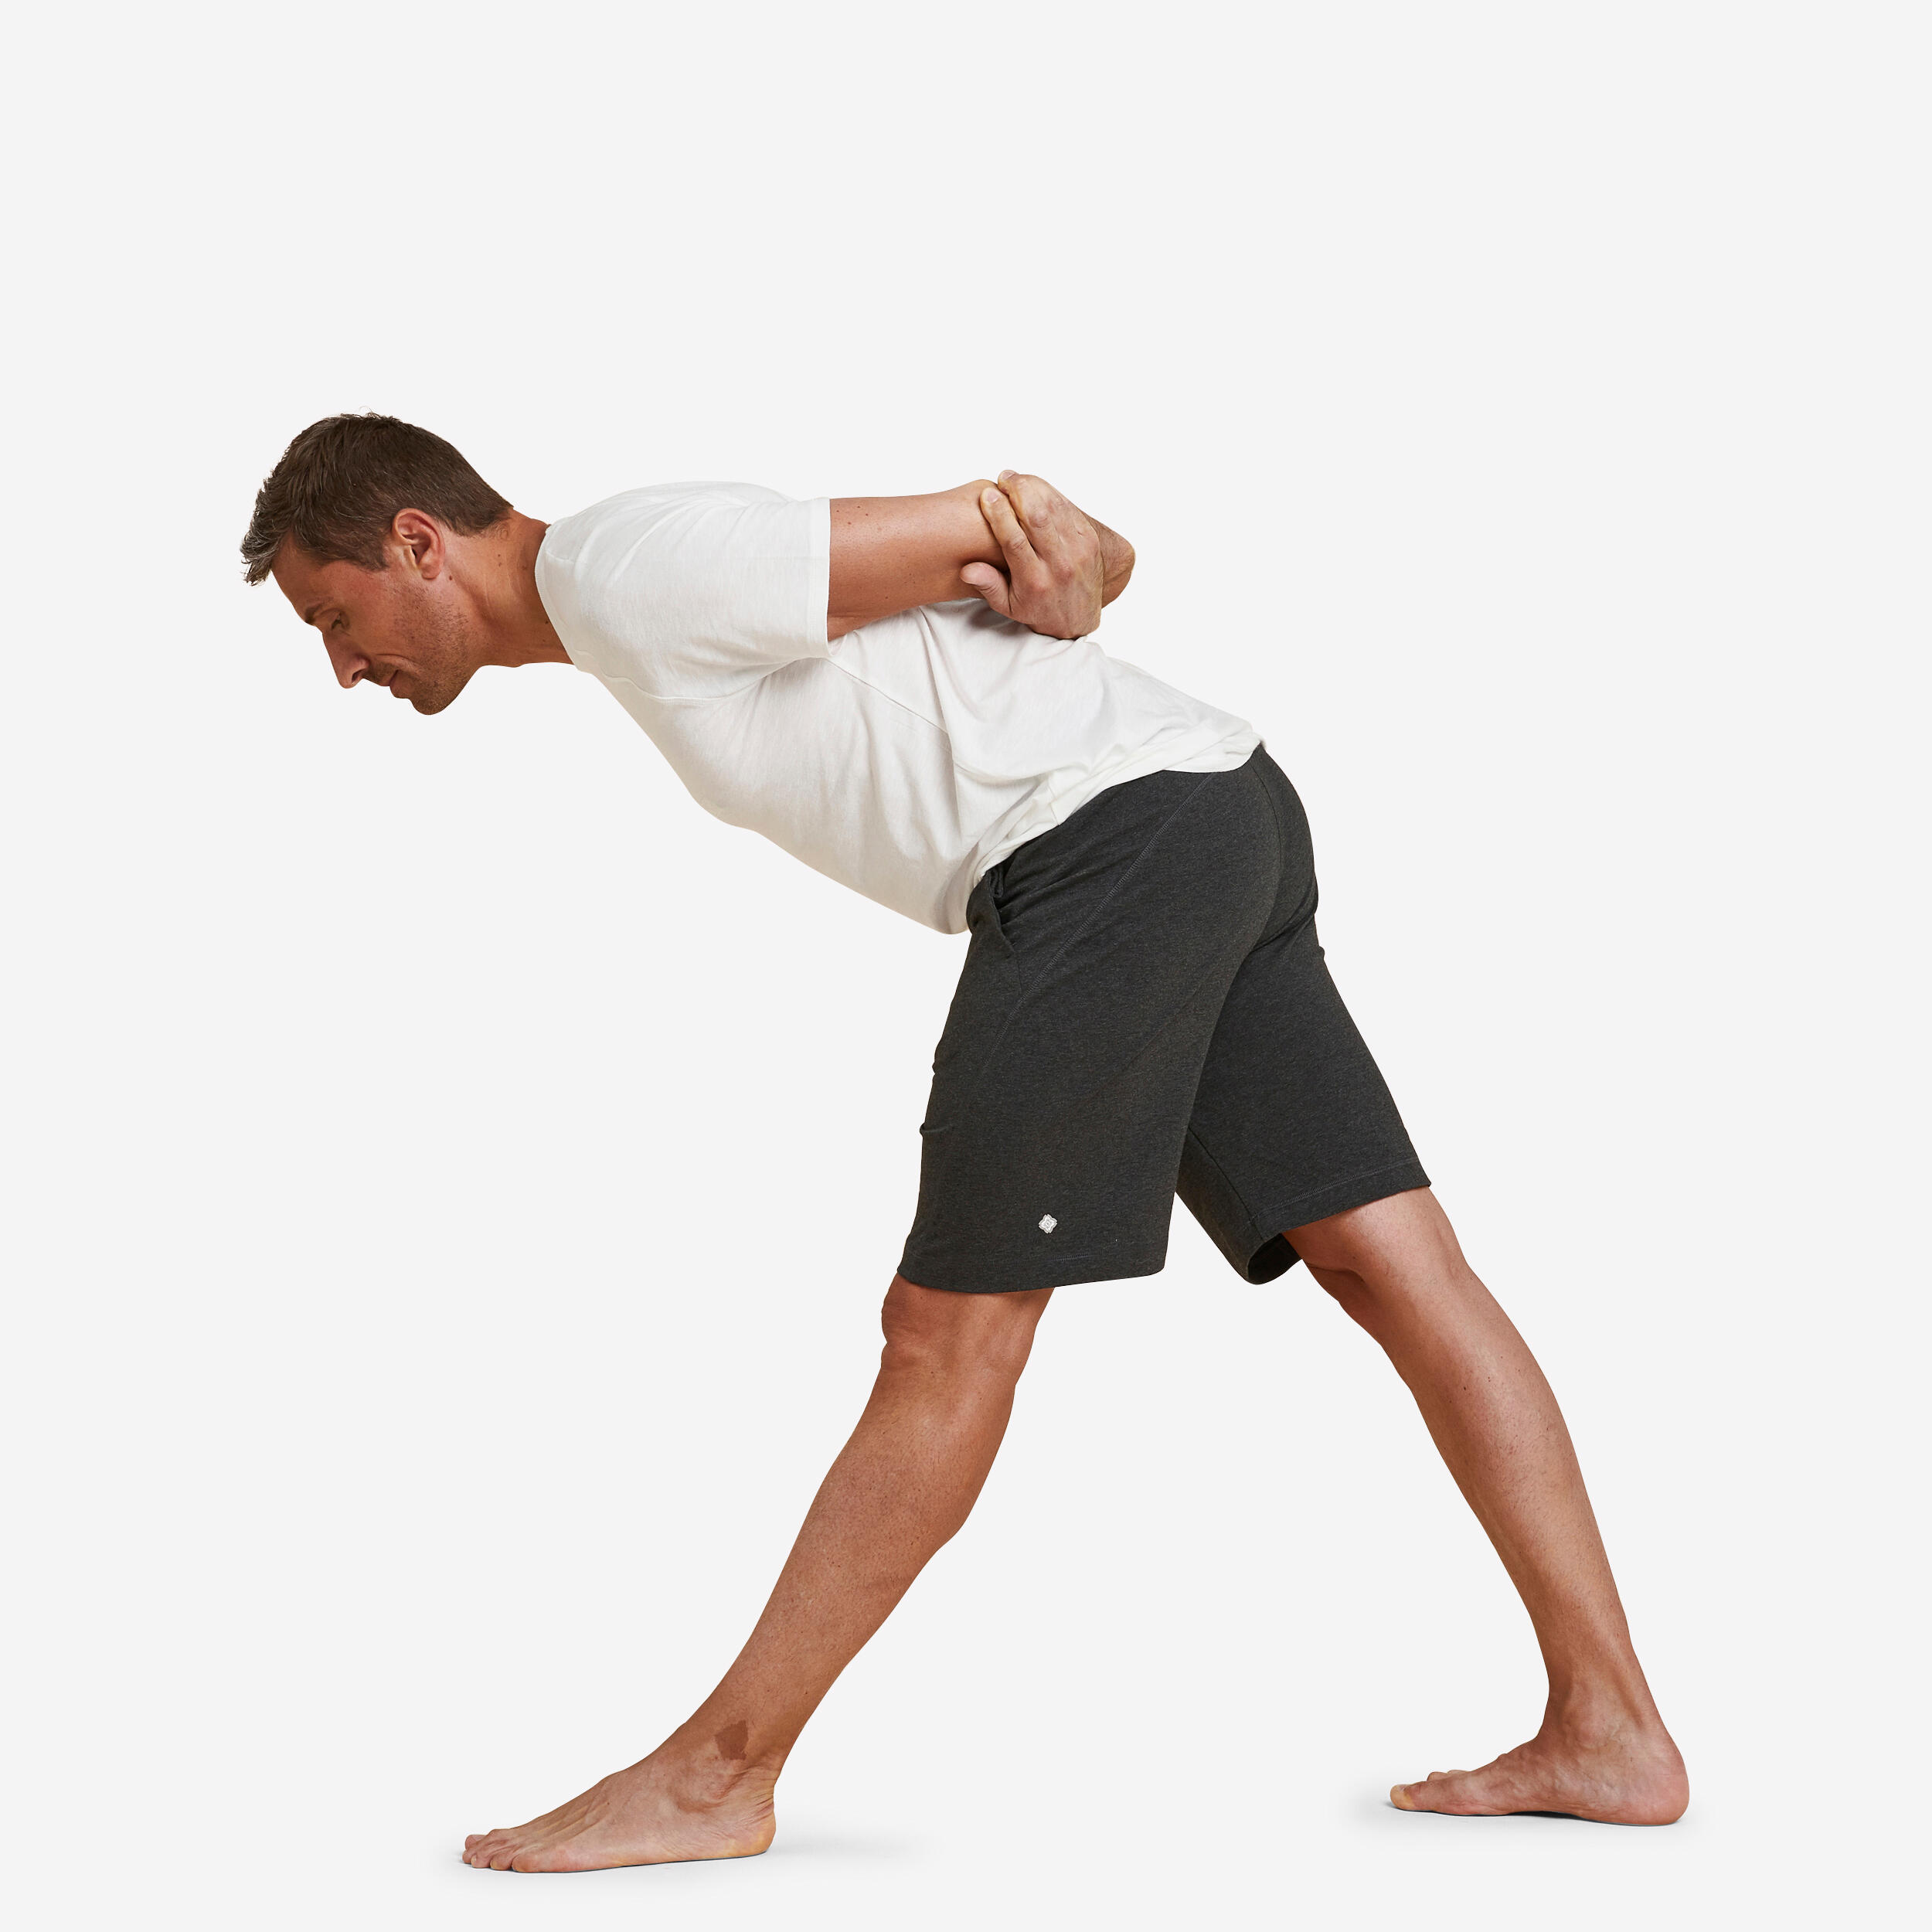 Men’s Cotton Yoga Shorts - Grey - KIMJALY